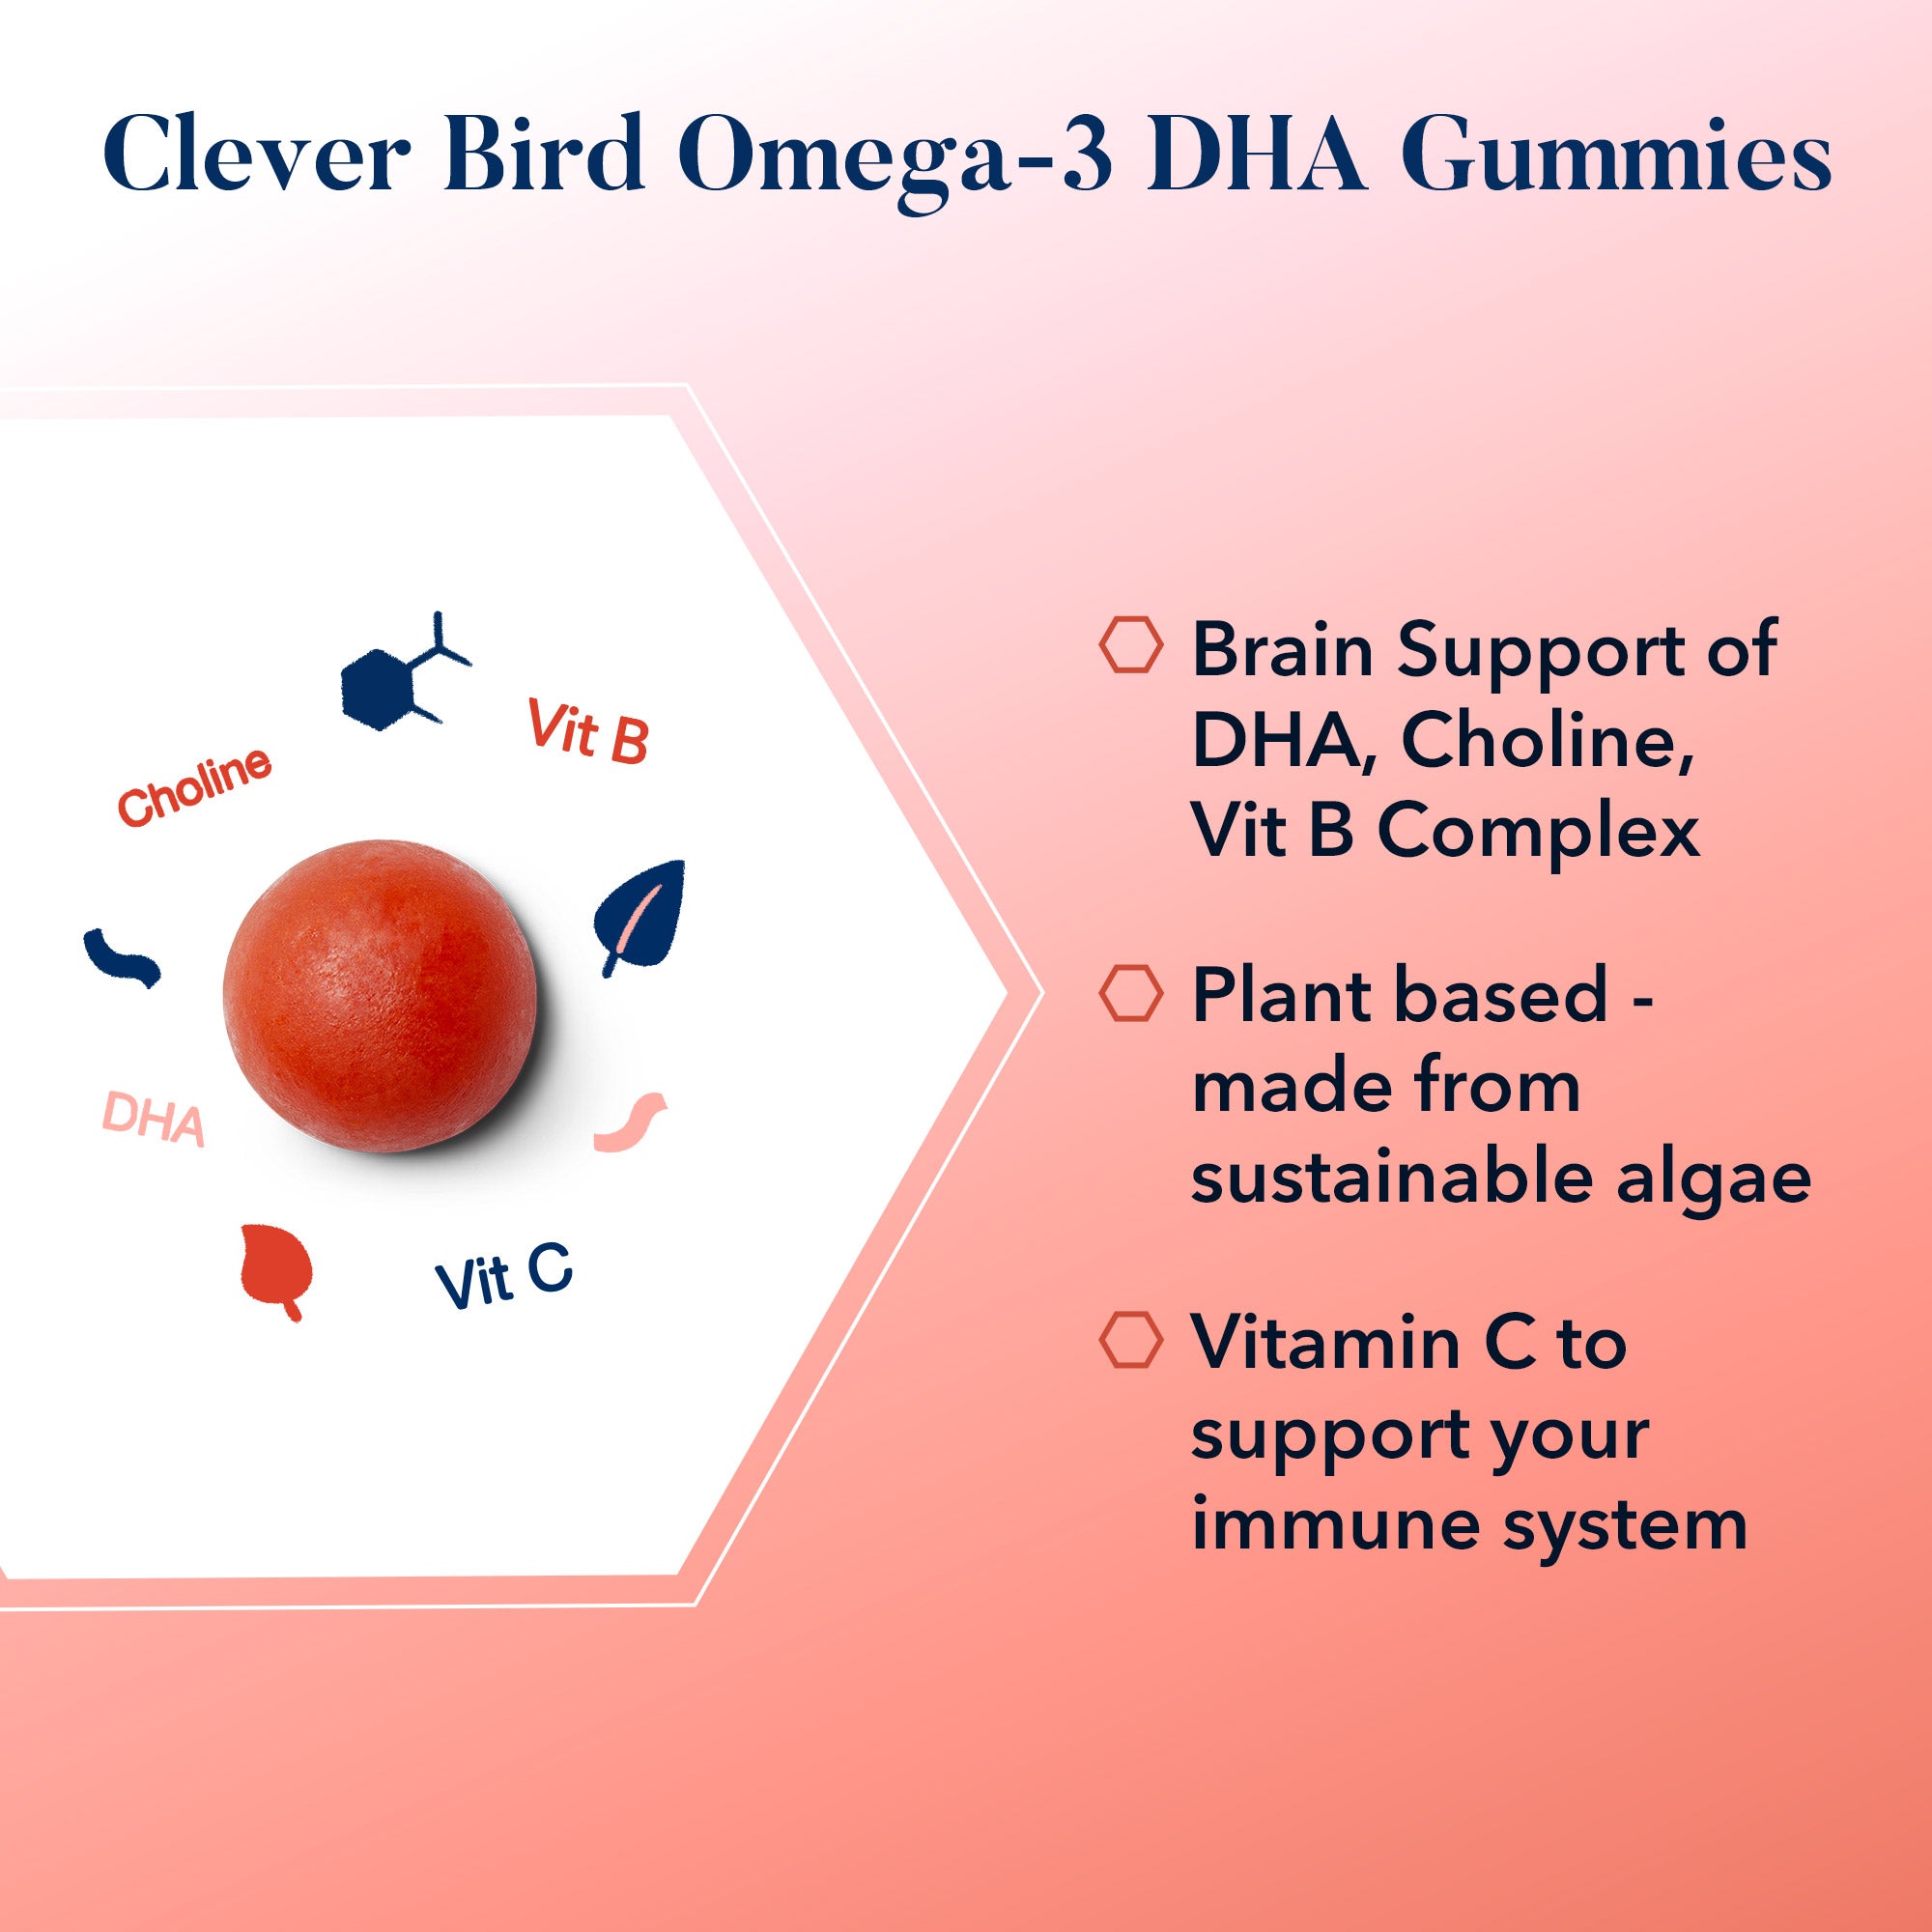 Clever Bird Omega-3 DHA Gummies